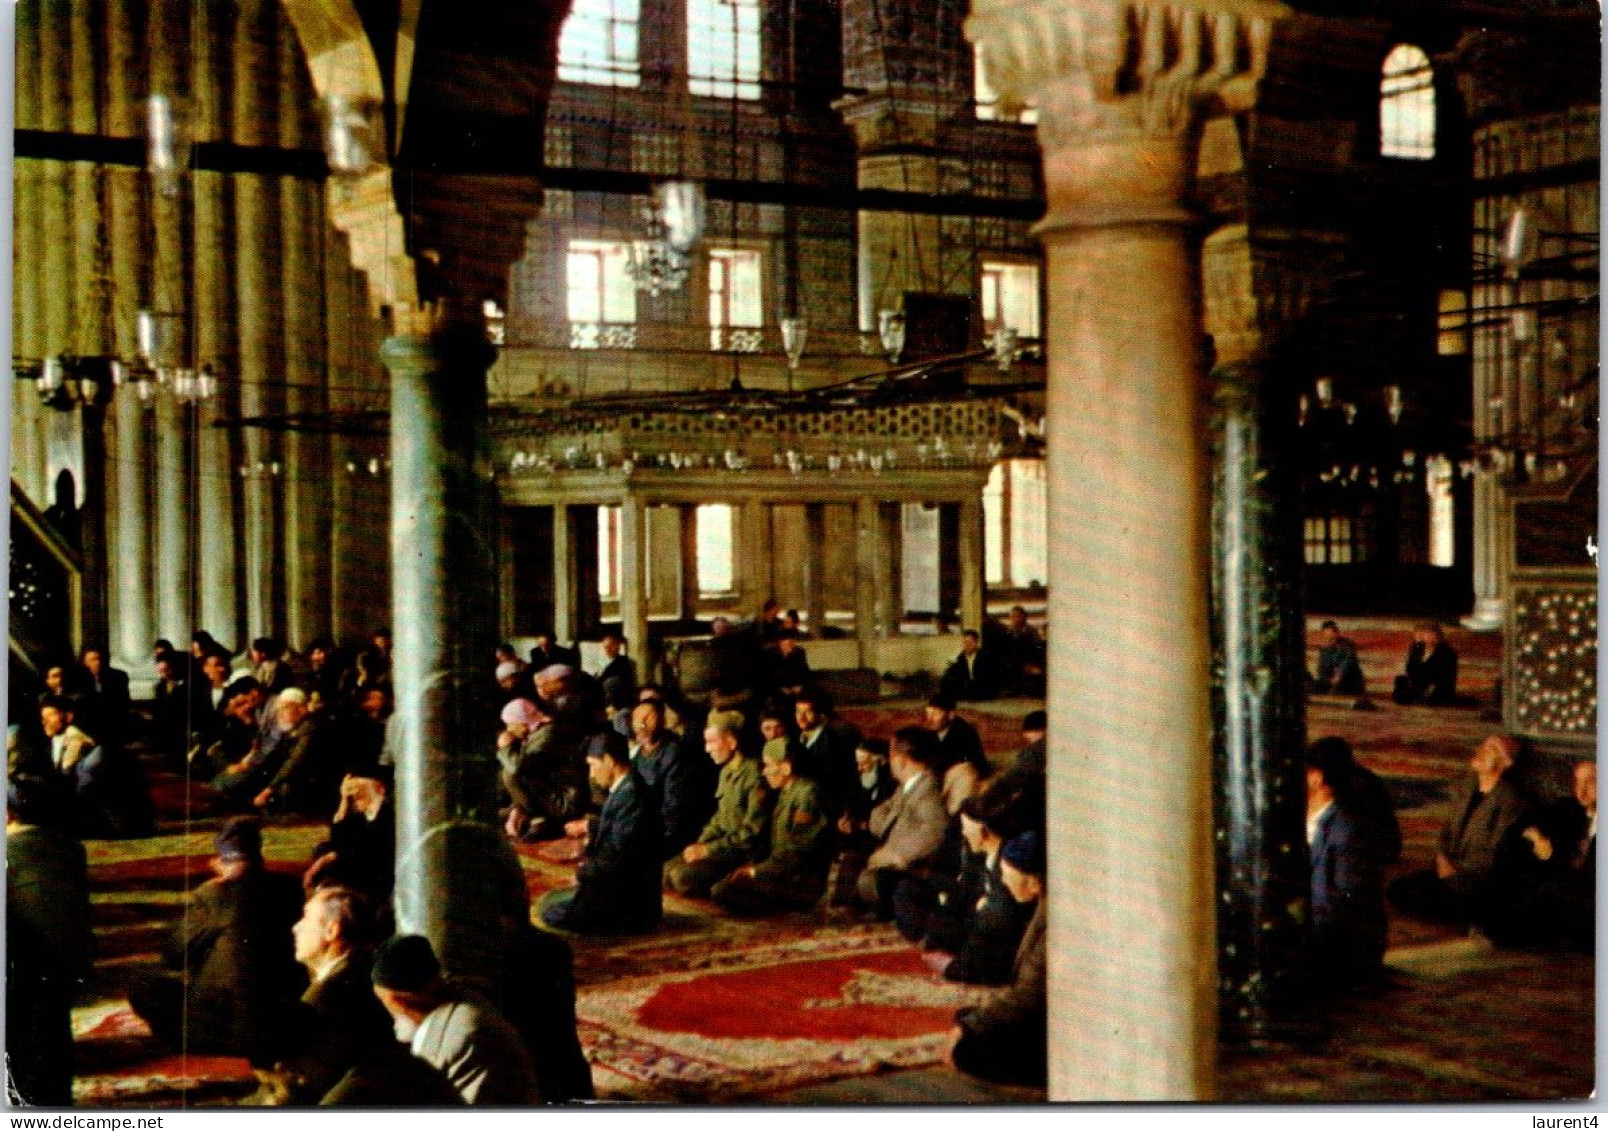 3-11-2023 (1 V 11) TURKEY - Istanbul Mosque (inside) - Islam